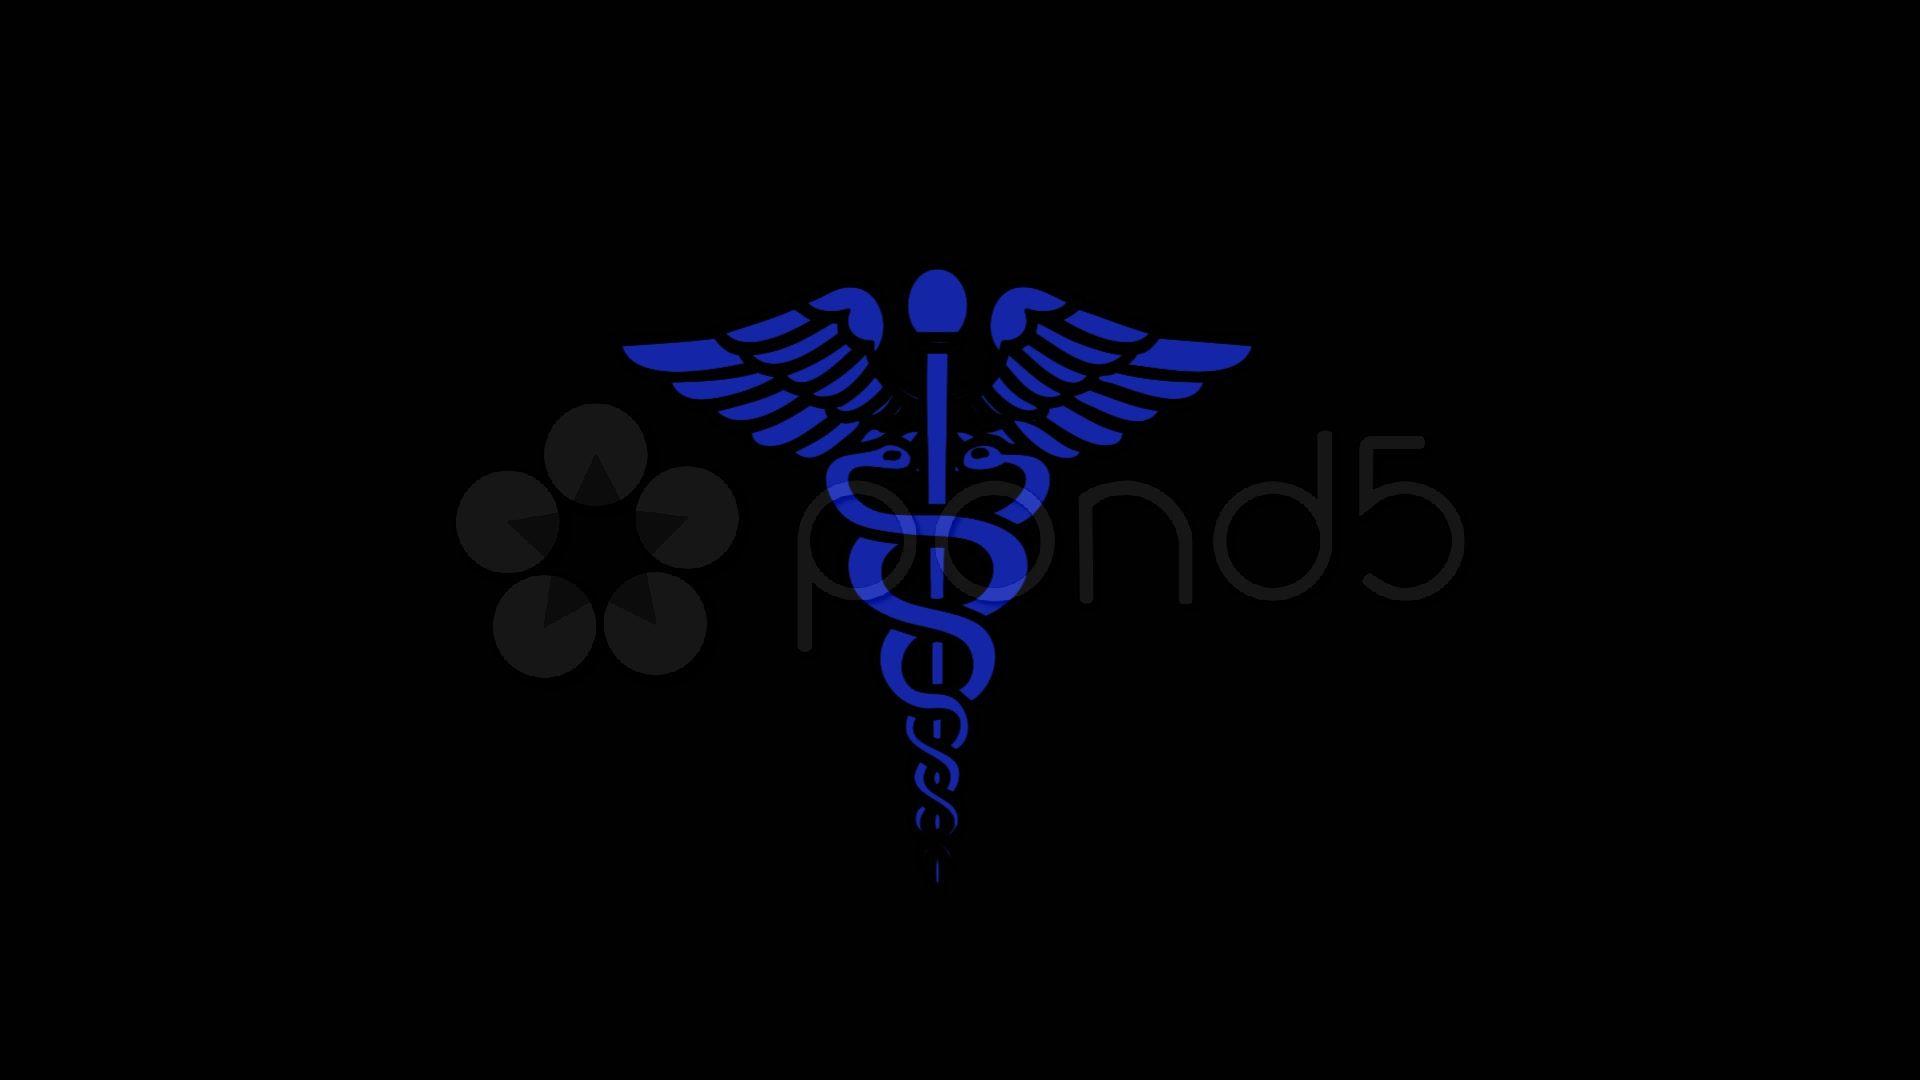 779578 Medical Logo Images Stock Photos  Vectors  Shutterstock